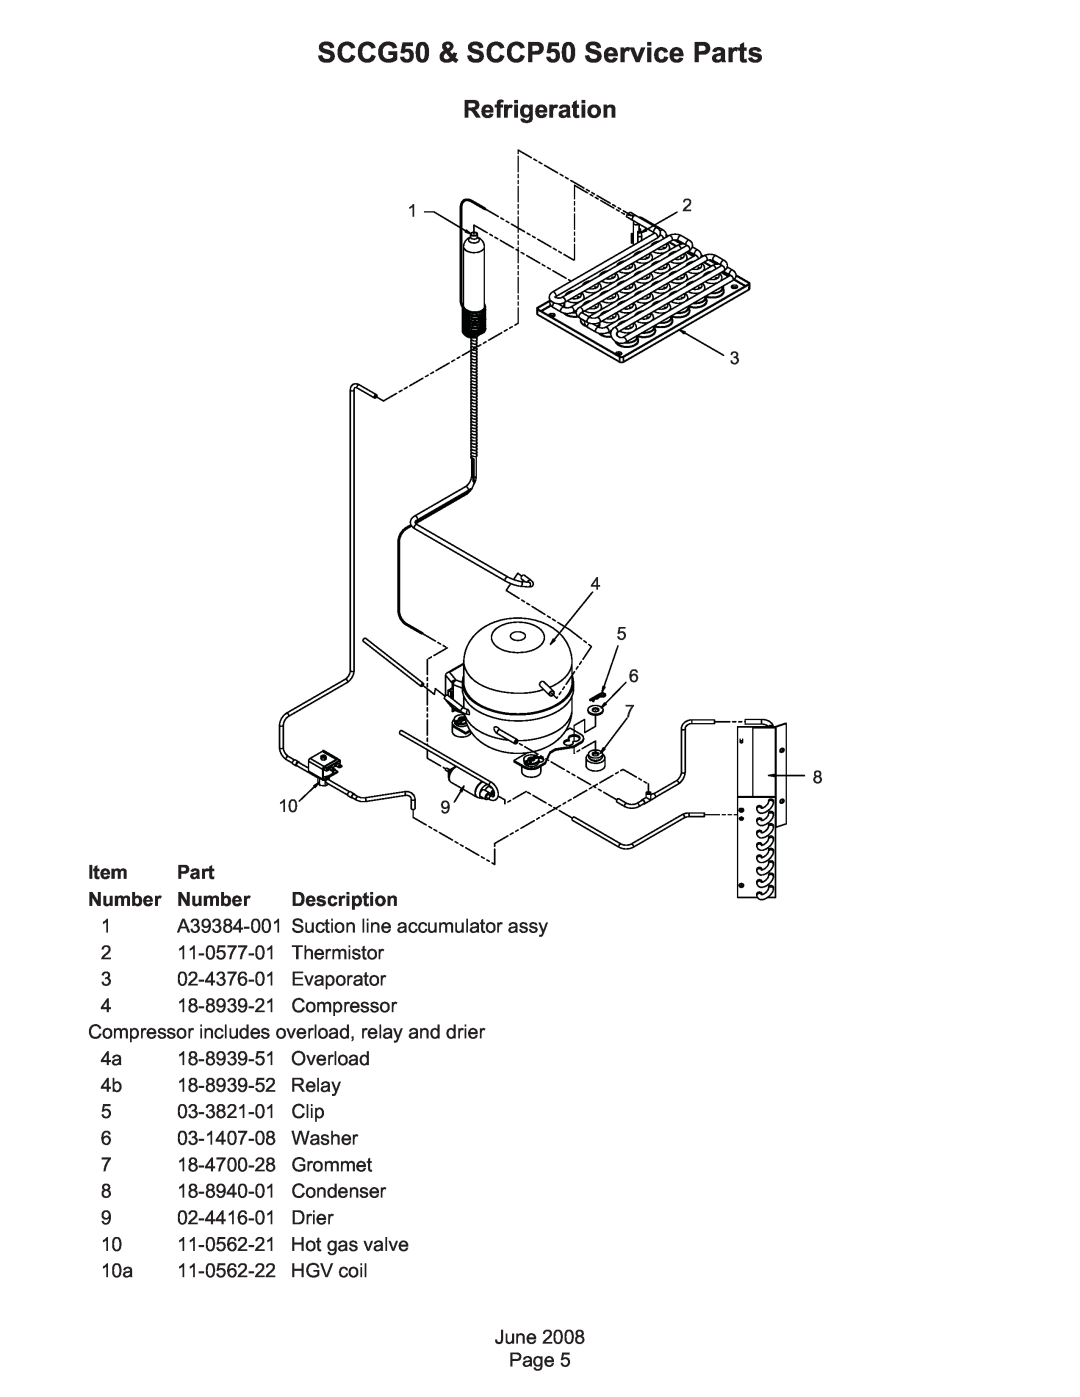 Scotsman Ice SCC50 manual Refrigeration, SCCG50 & SCCP50 Service Parts, Item Part Number Number Description 